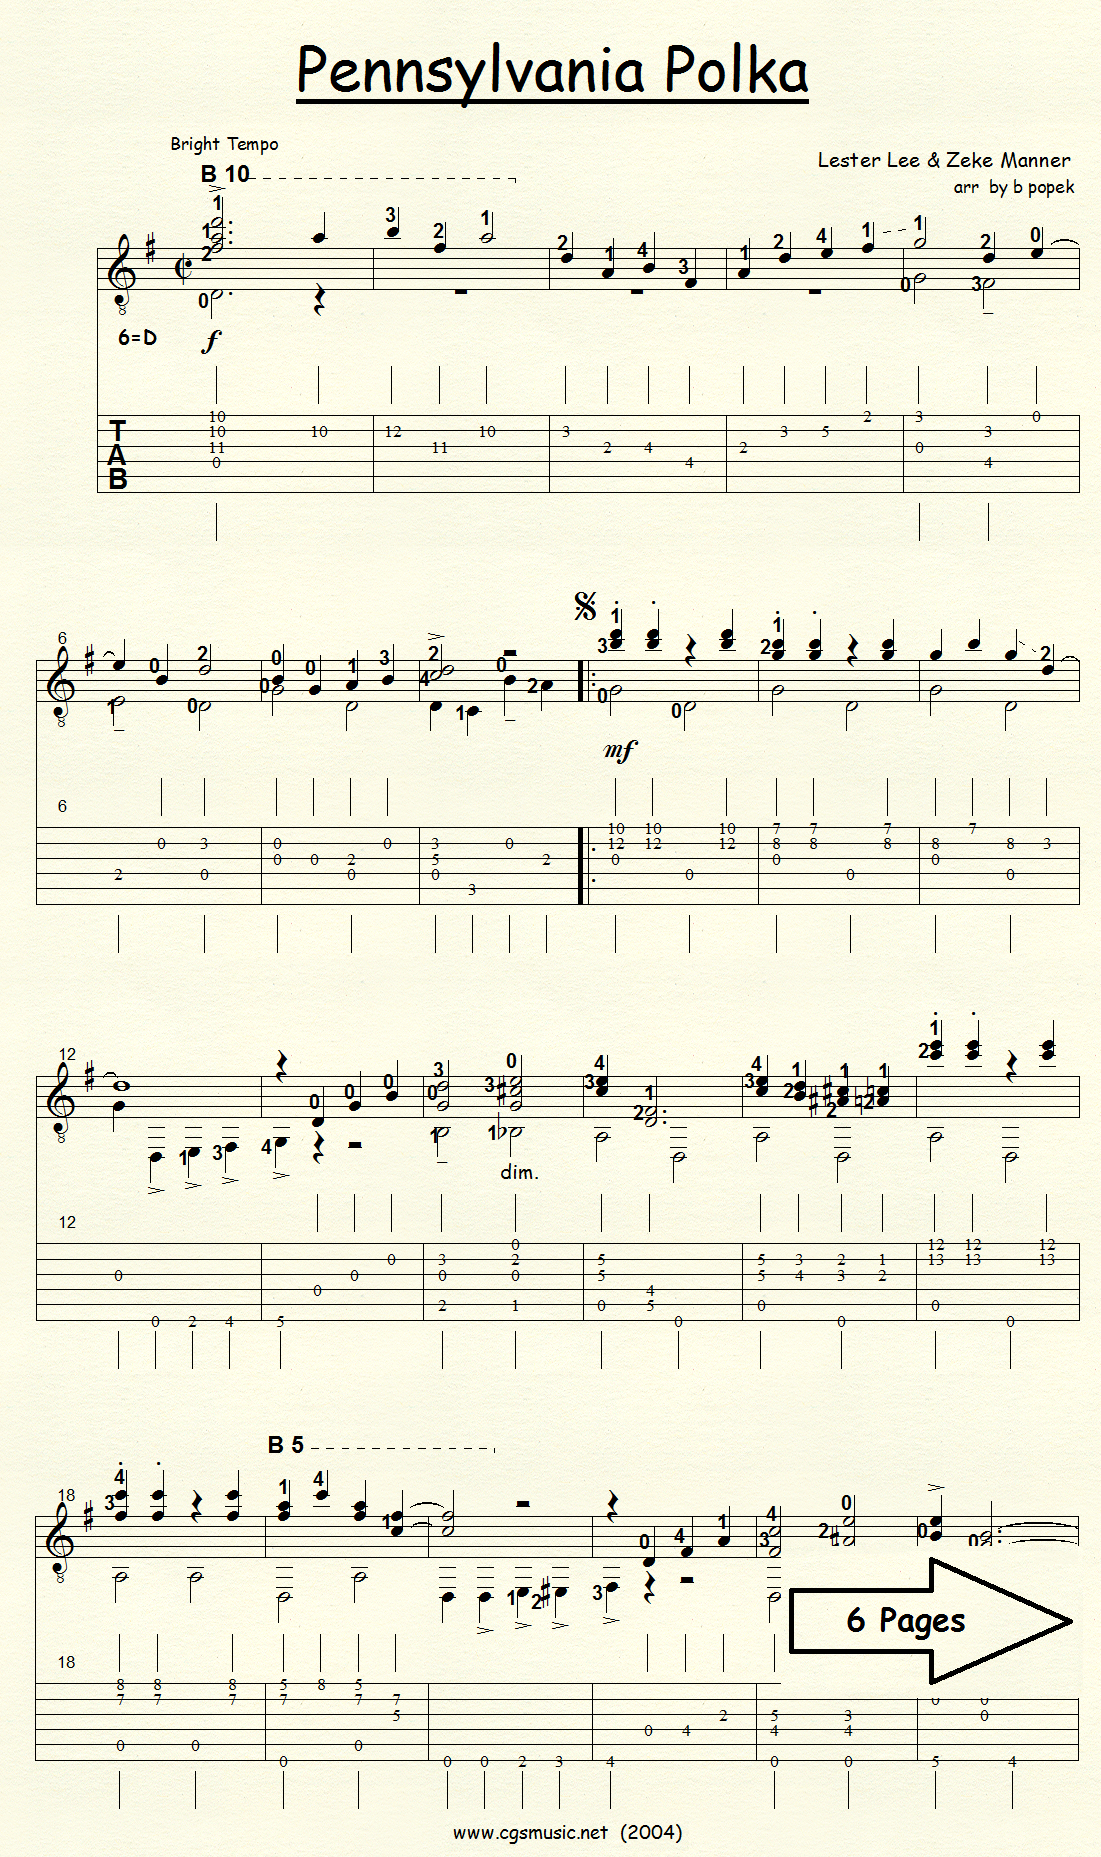 Pennsylvania Polka (Lee & Manner) for Classical Guitar in Tablature